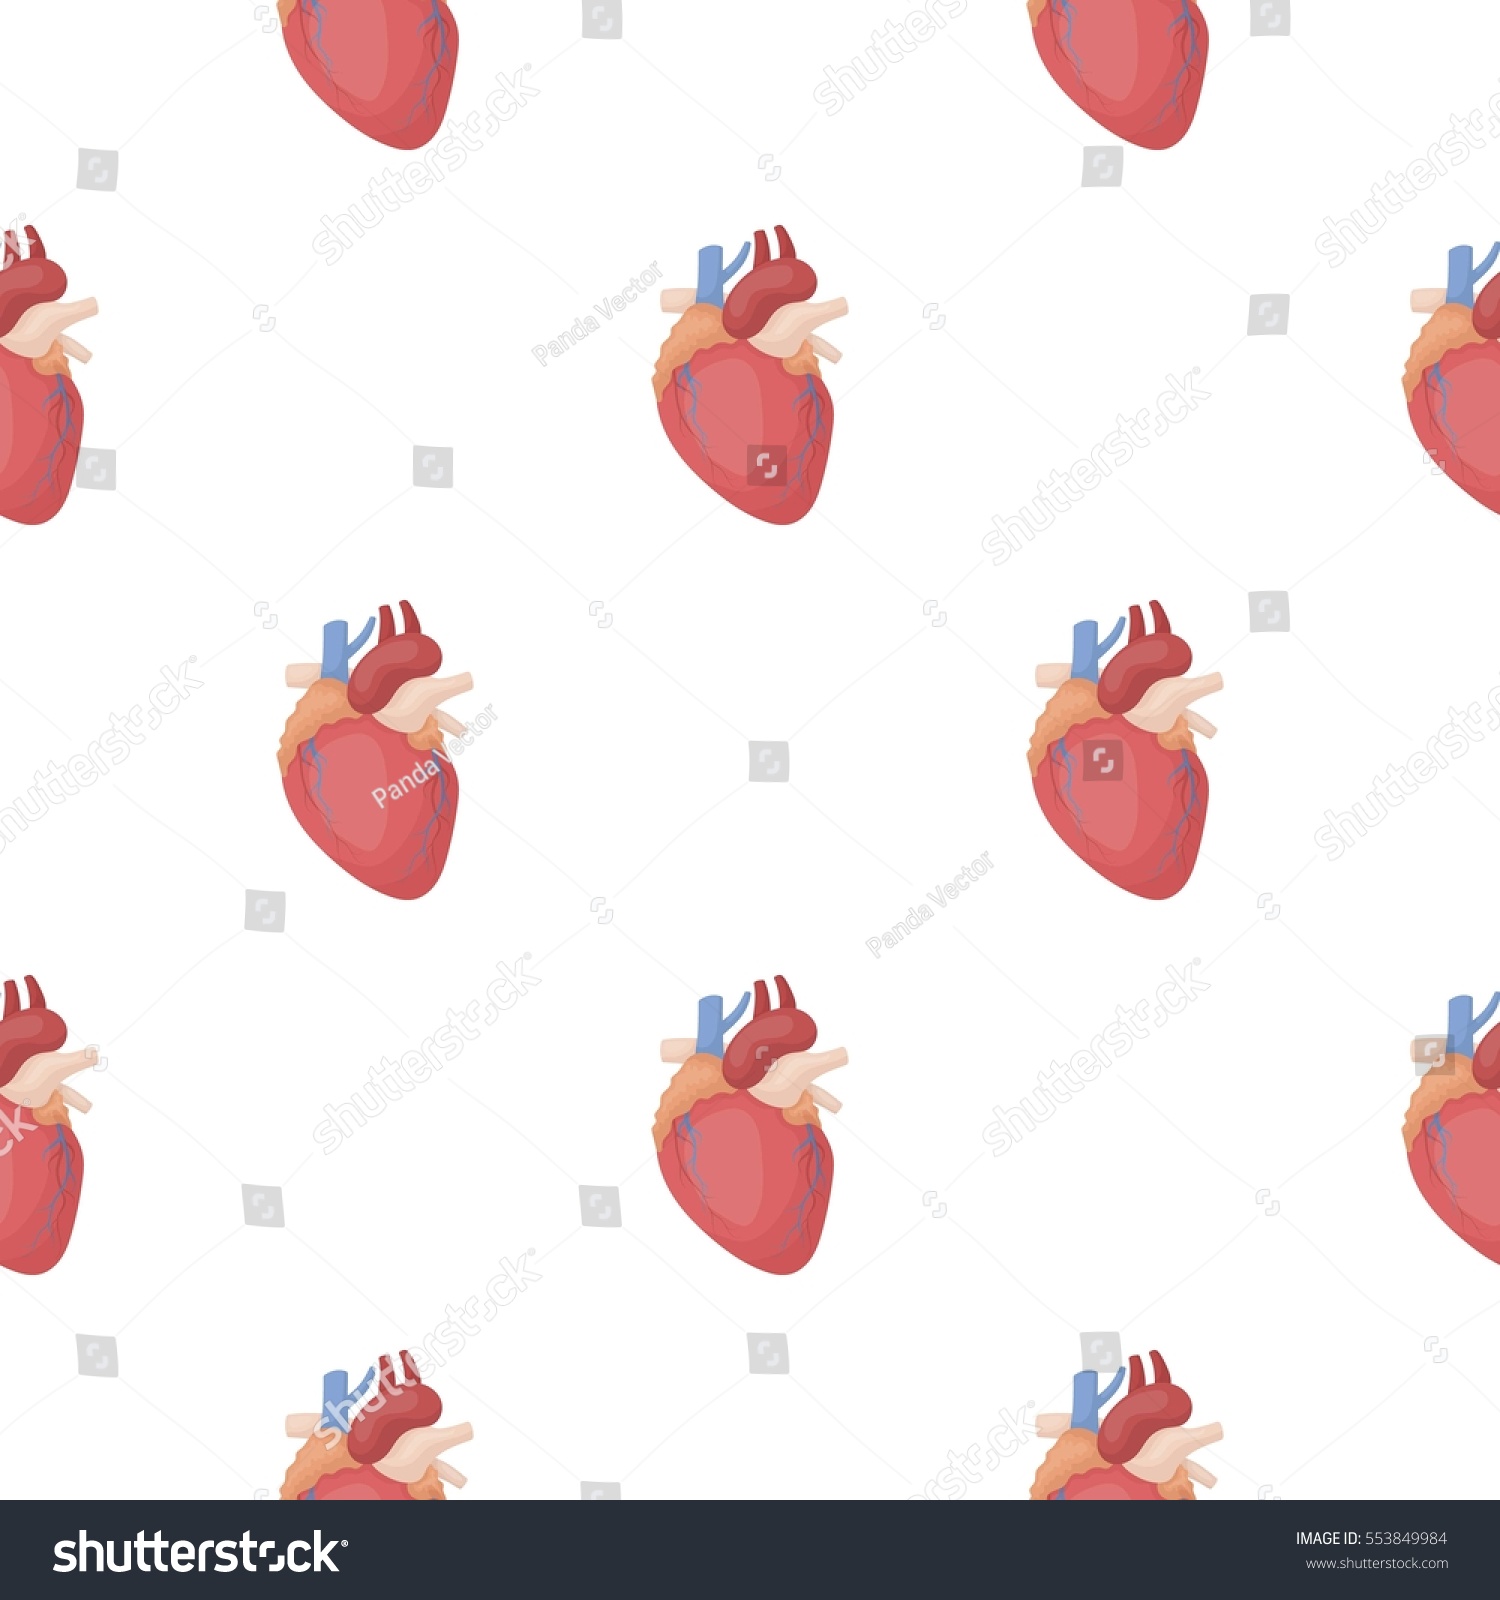 Edit Vectors Free Online - Heart icon | Shutterstock Editor